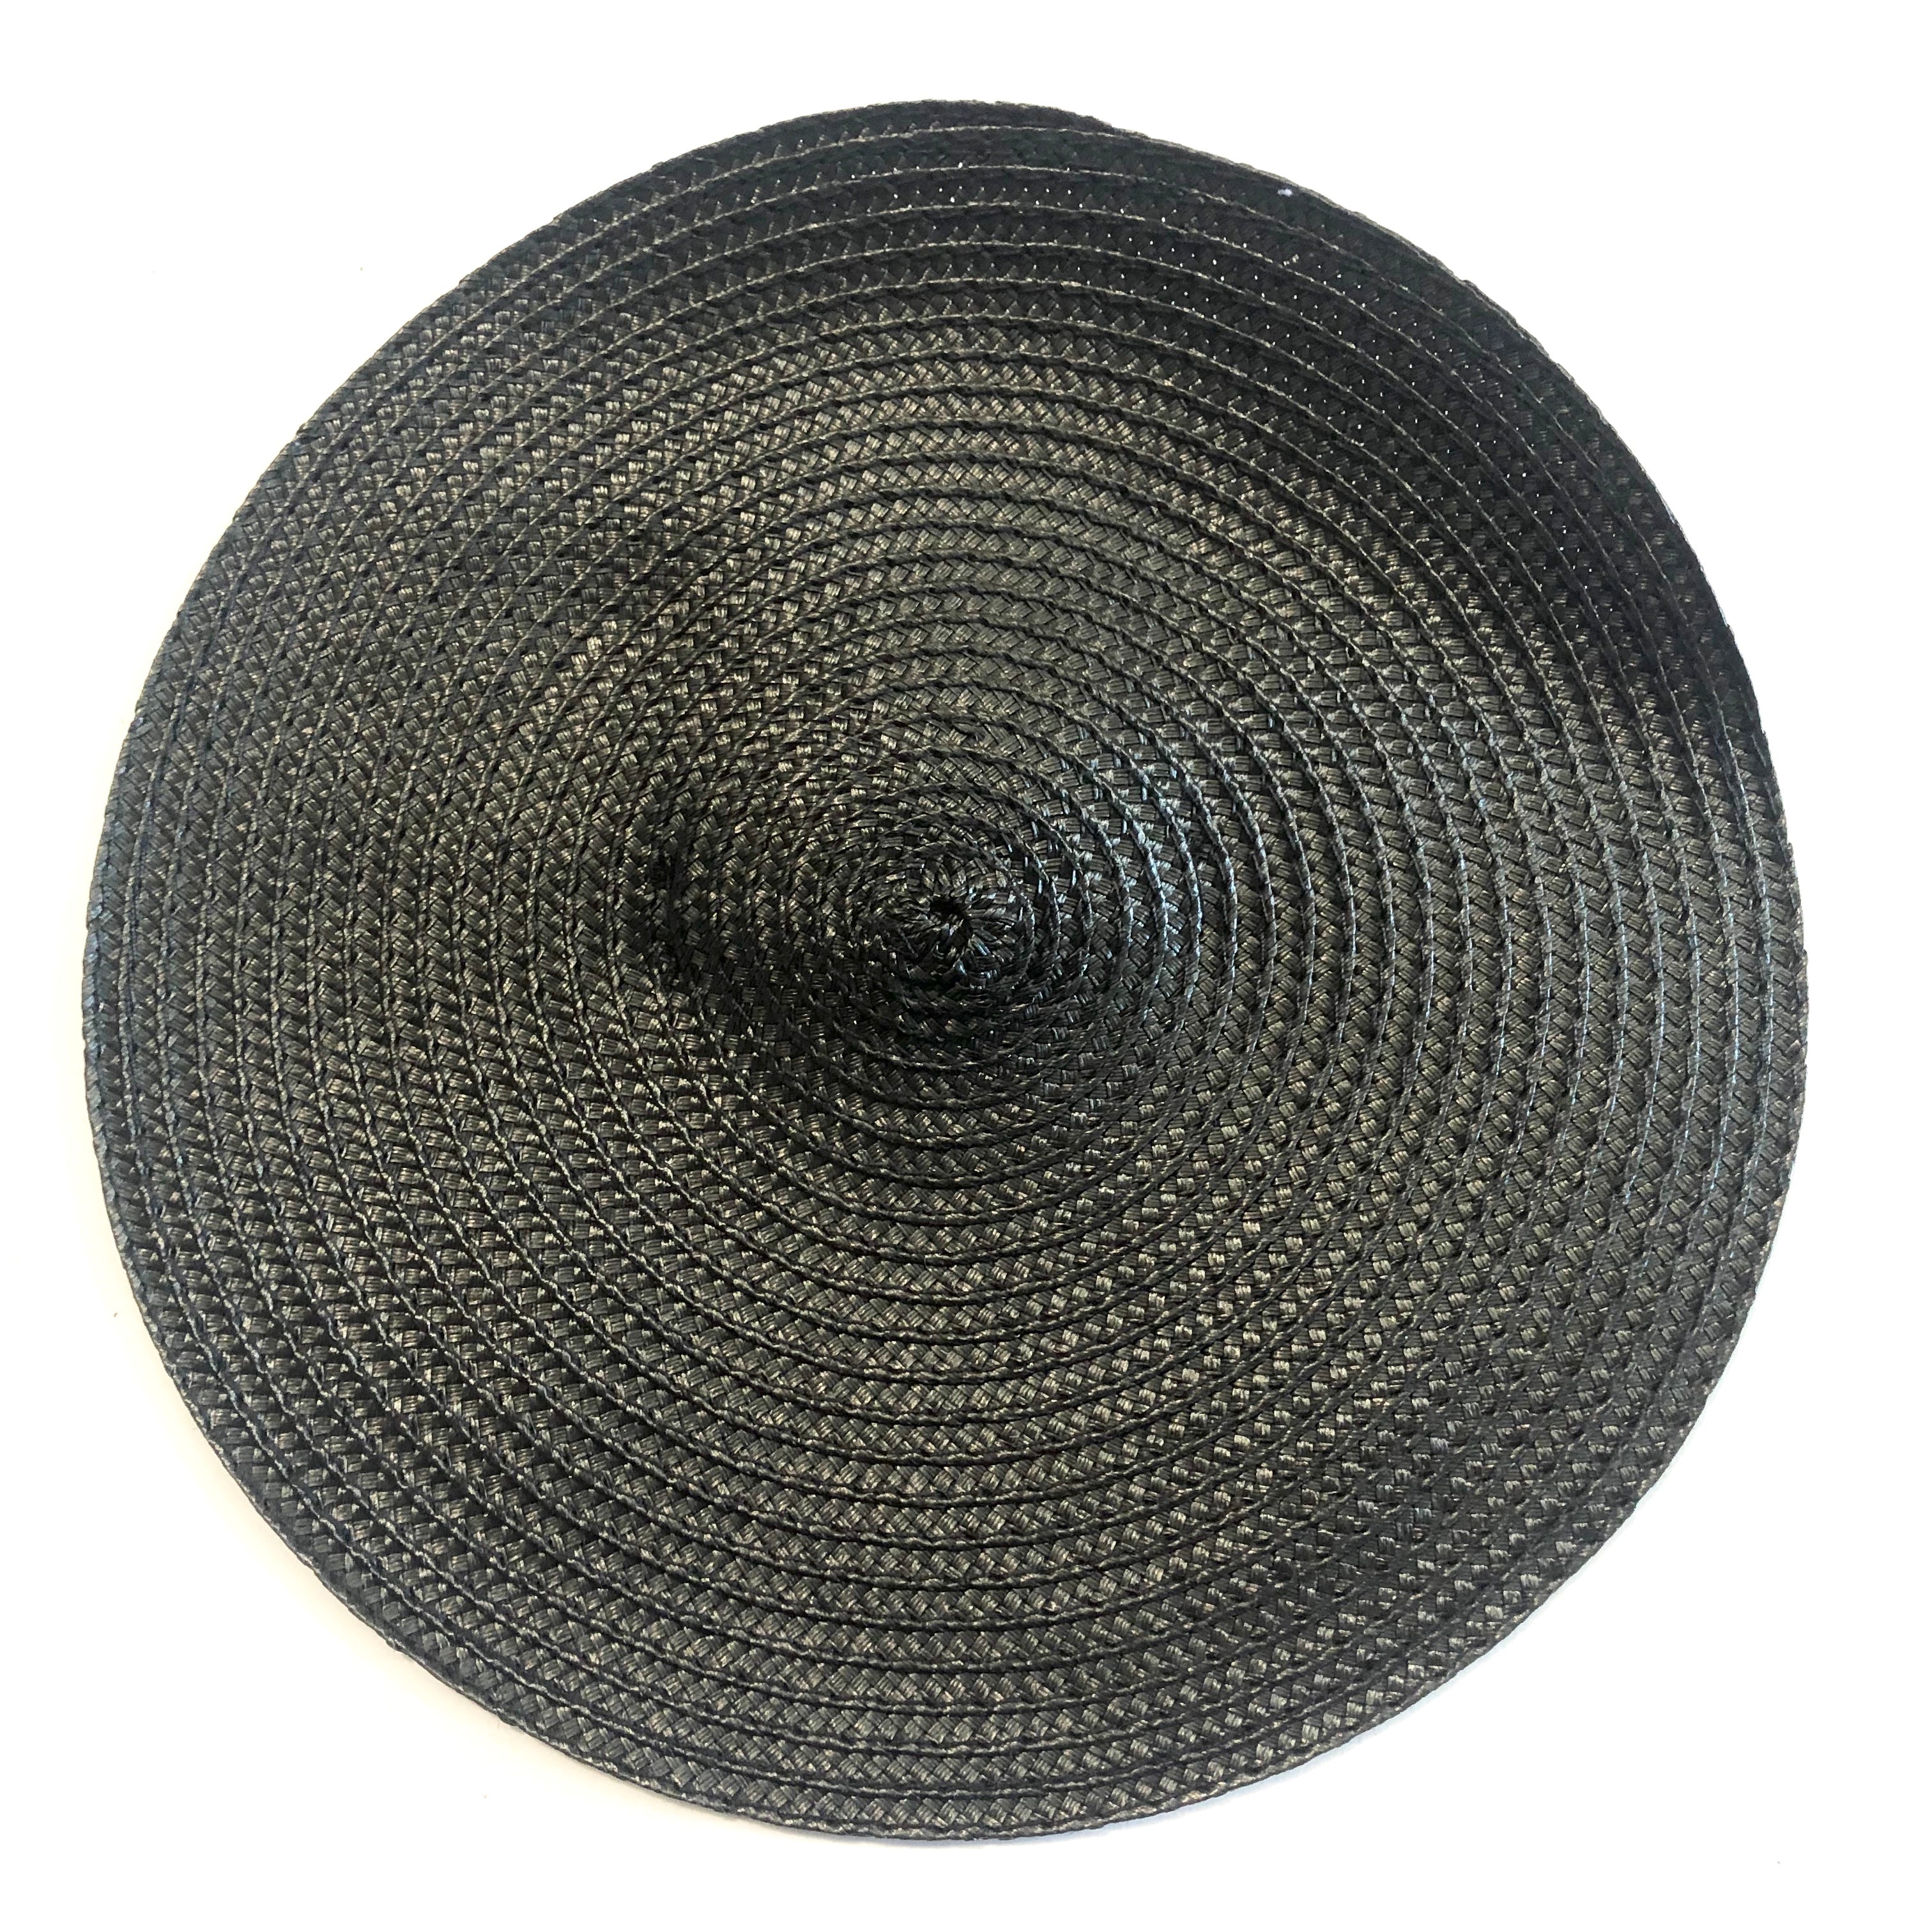 Polybraid 240mm Round Disc Millinery Fascinator Base - Black